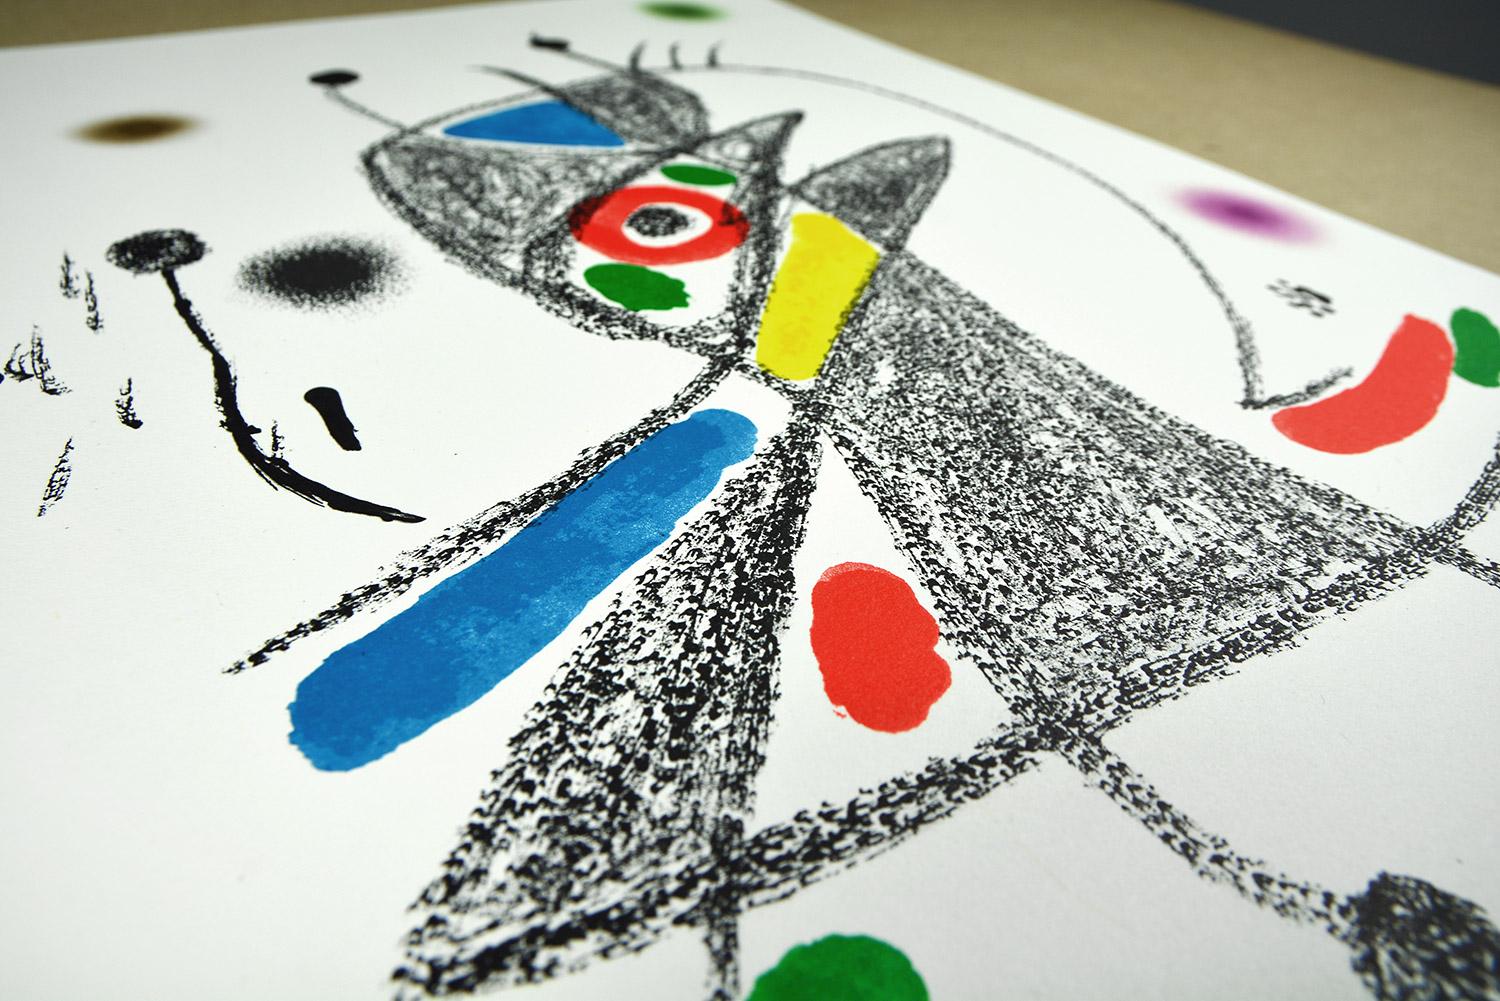 Joan Miró - Maravillas con variaciones acrósticas en el jardín de Miró II
Date of creation: 1975
Medium: Lithograph on Gvarro paper
Edition: 1500
Size: 49,5 x 35,5 cm
Condition: In very good conditions and never framed
Observations: Lithograph on